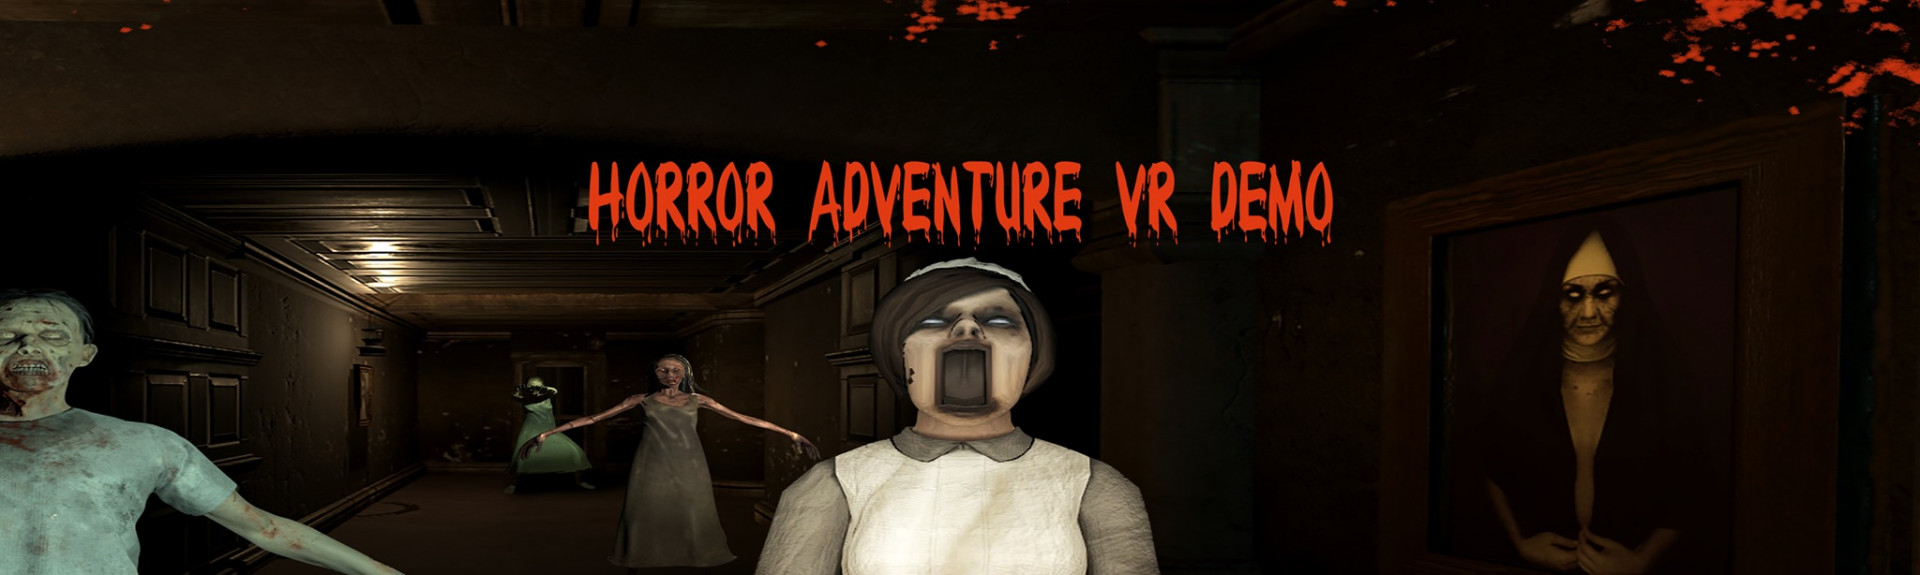 Horror Adventure VR Demo